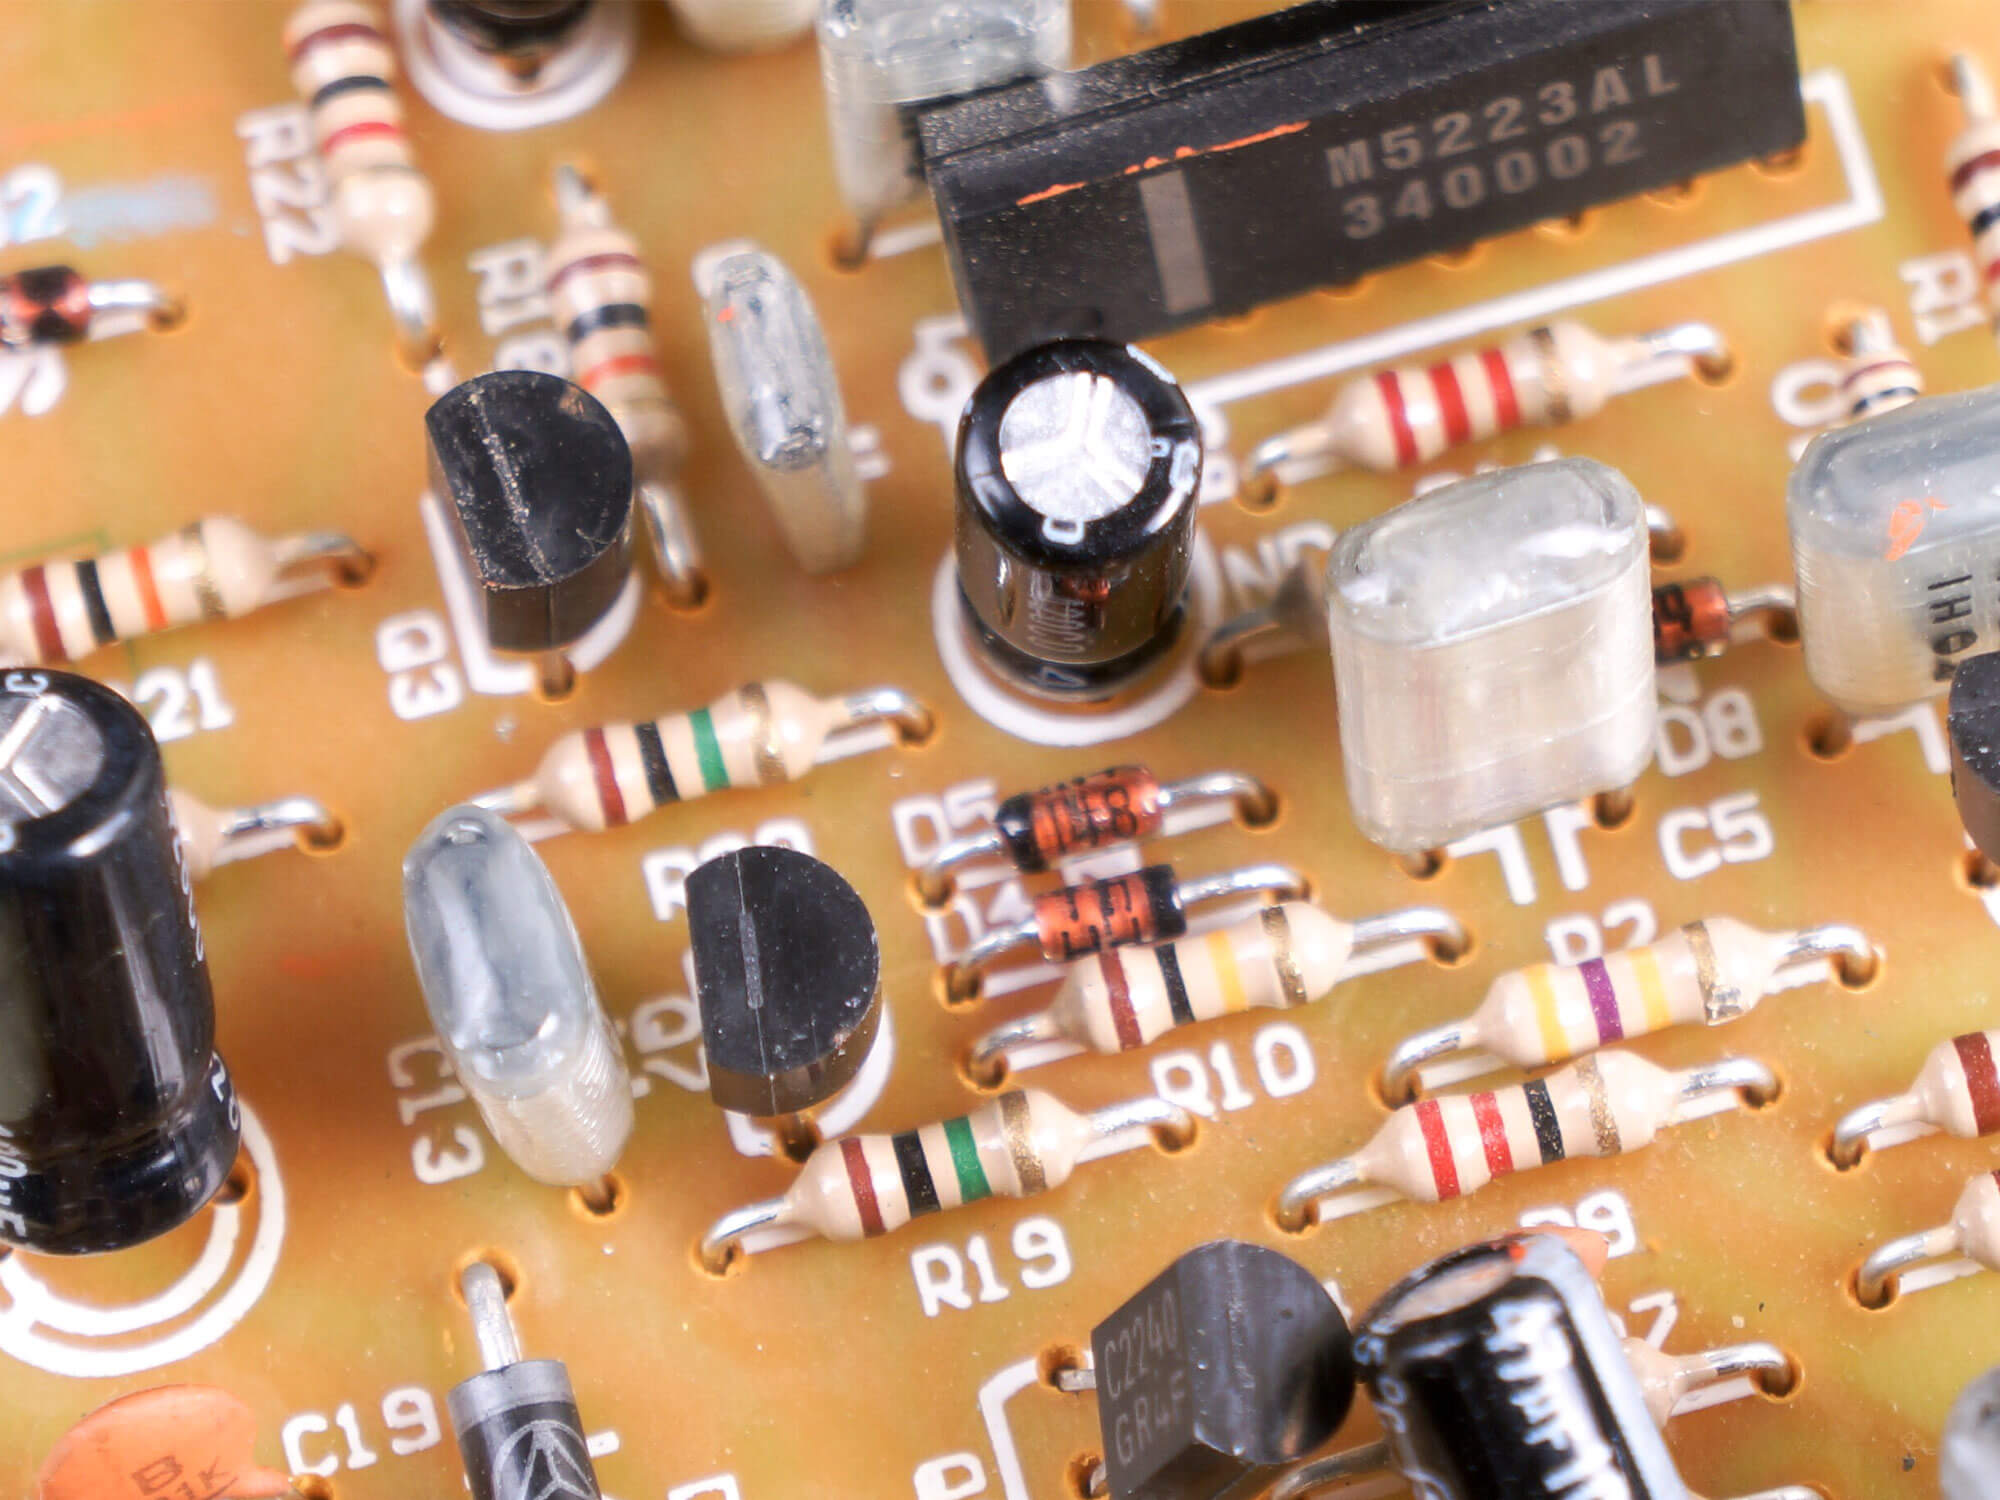 A guitar pedal circuit board